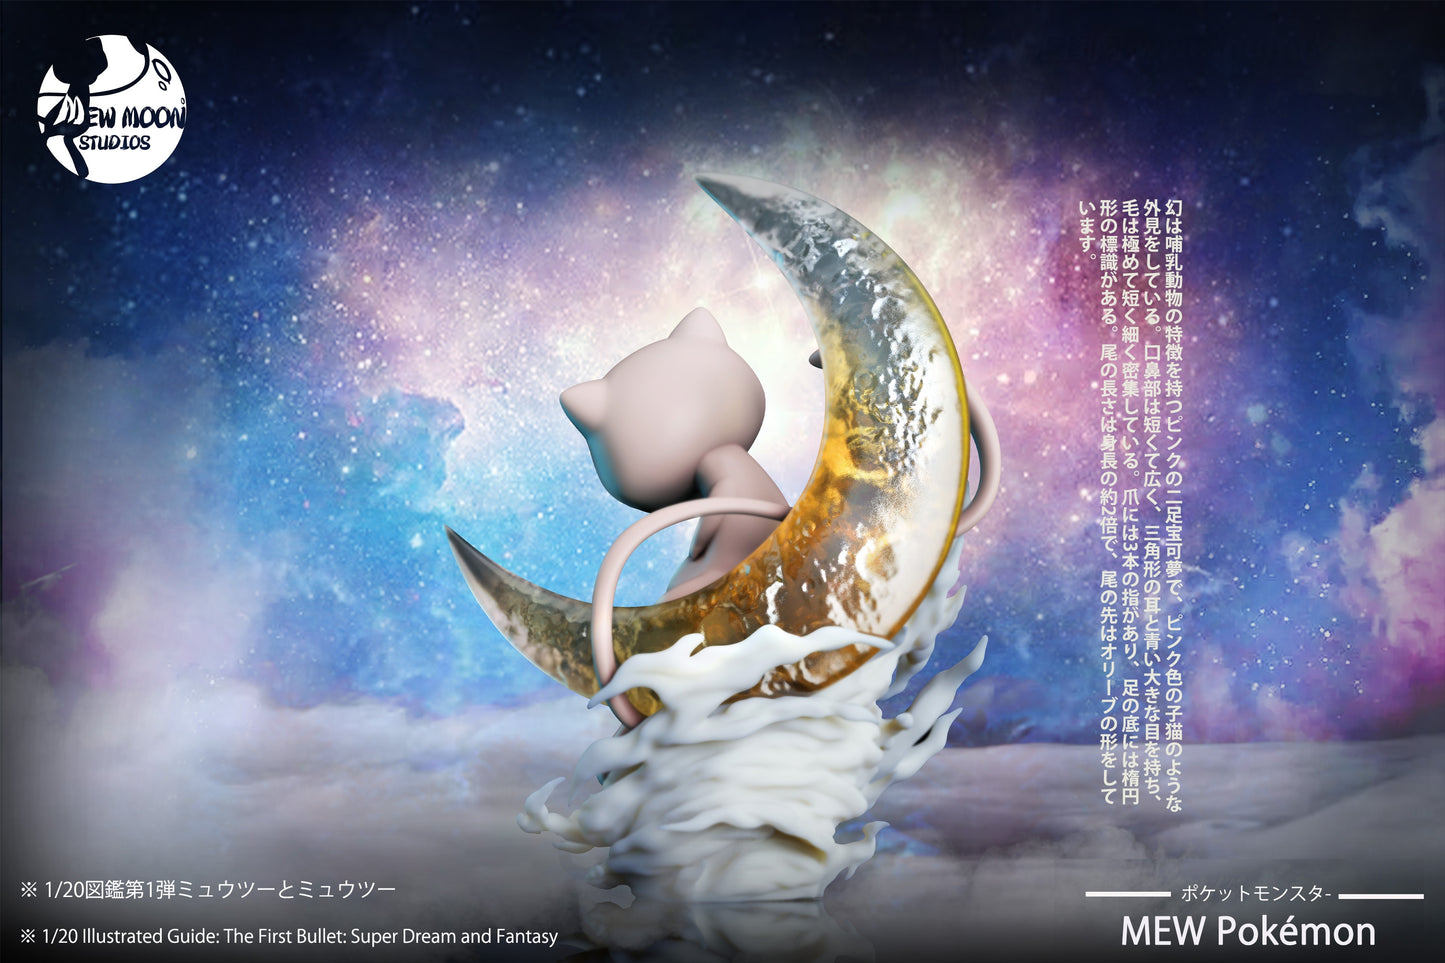 Mew Moon Studios - Mew and Mewtwo [PRE-ORDER]